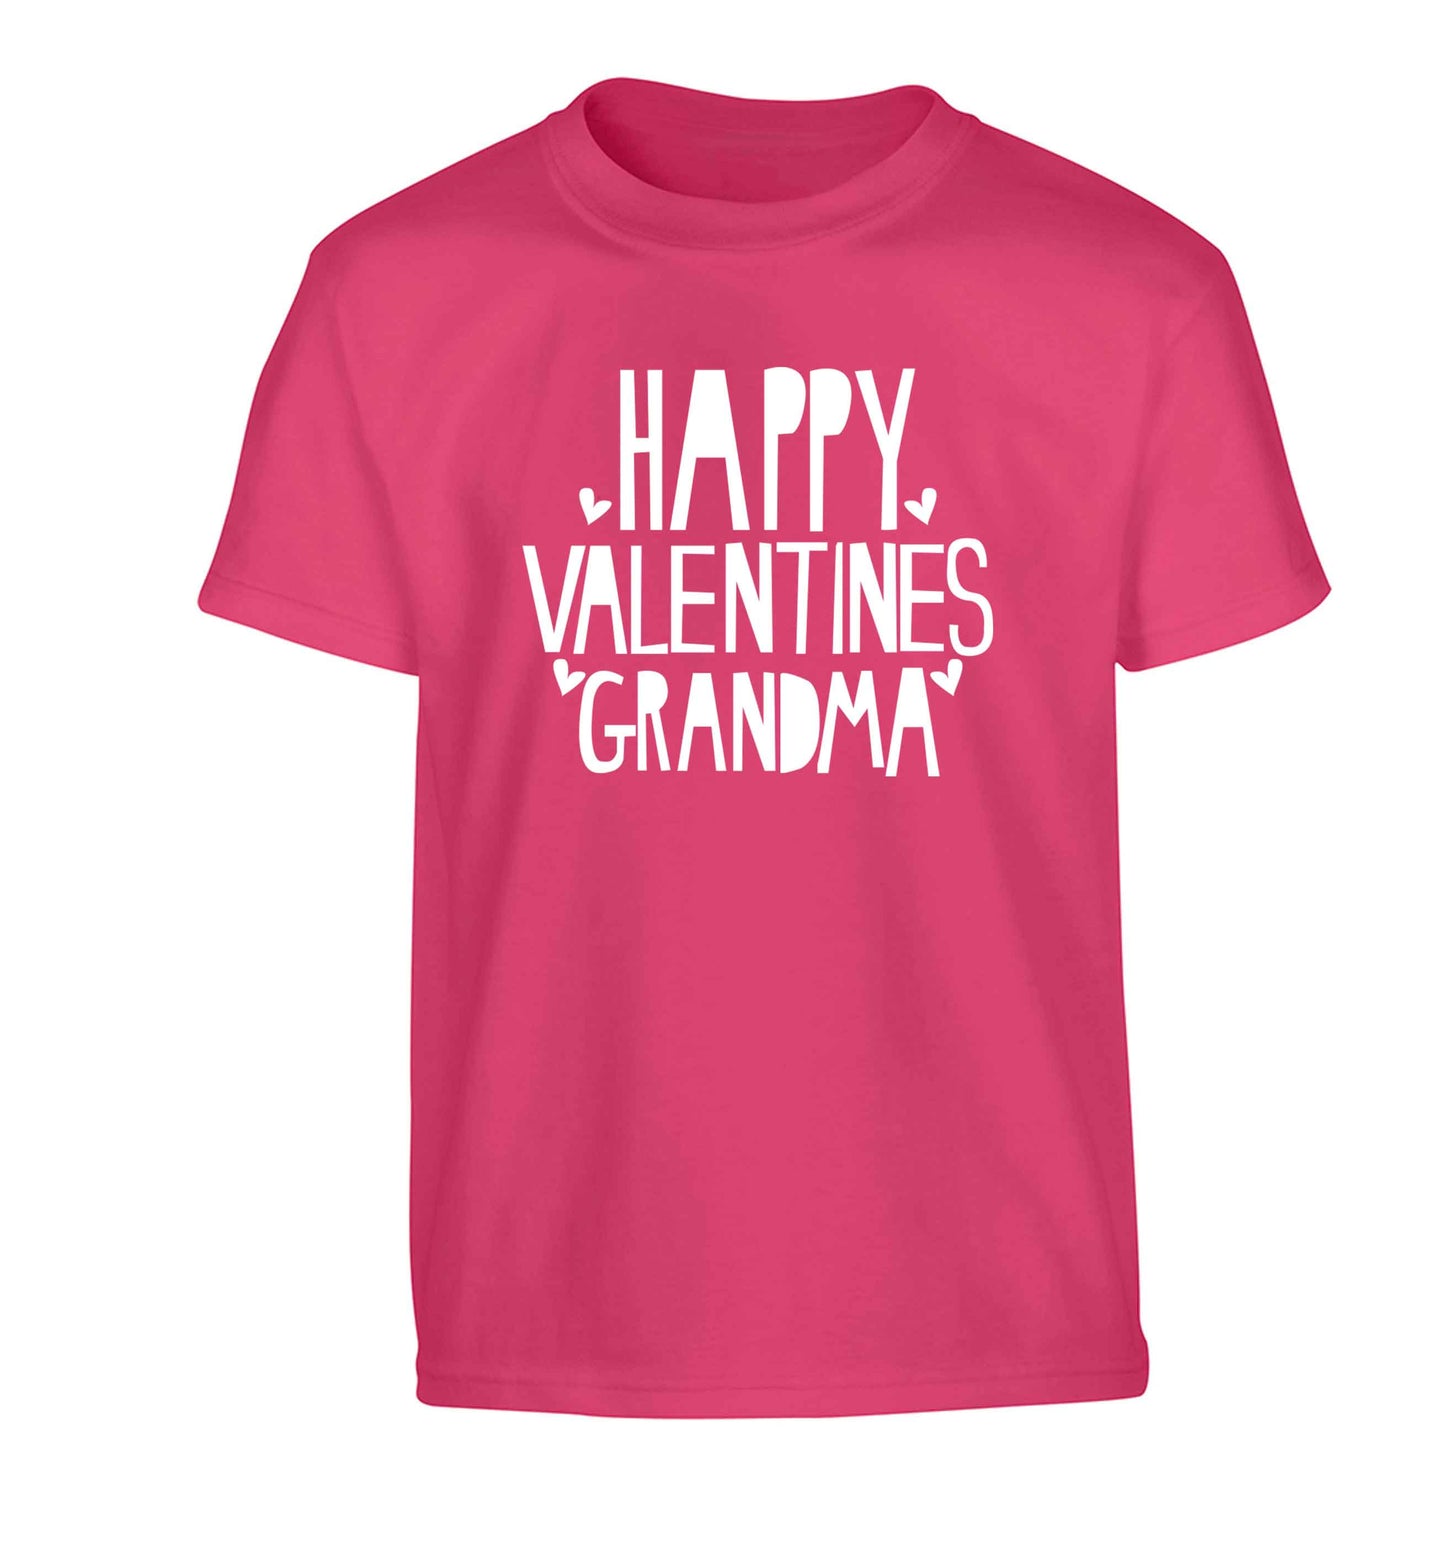 Happy valentines grandma Children's pink Tshirt 12-13 Years